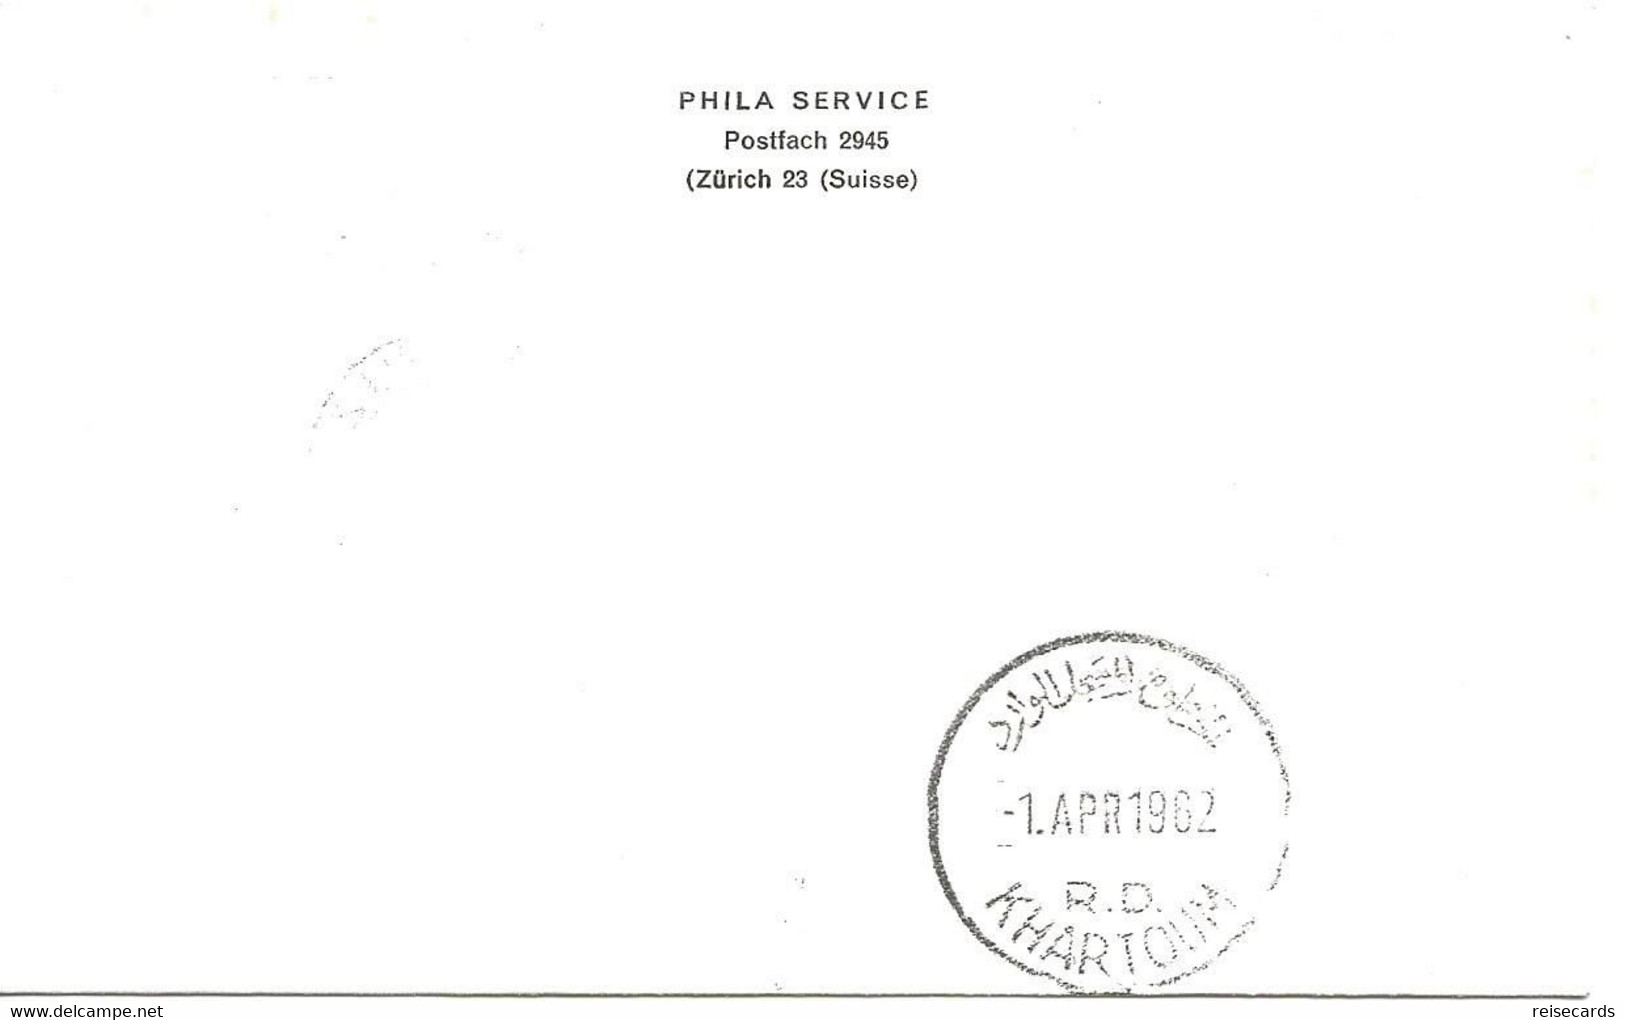 Liechtenstein: 1962 Swissair Air Mail Brief Zürich - Khartoum - Covers & Documents